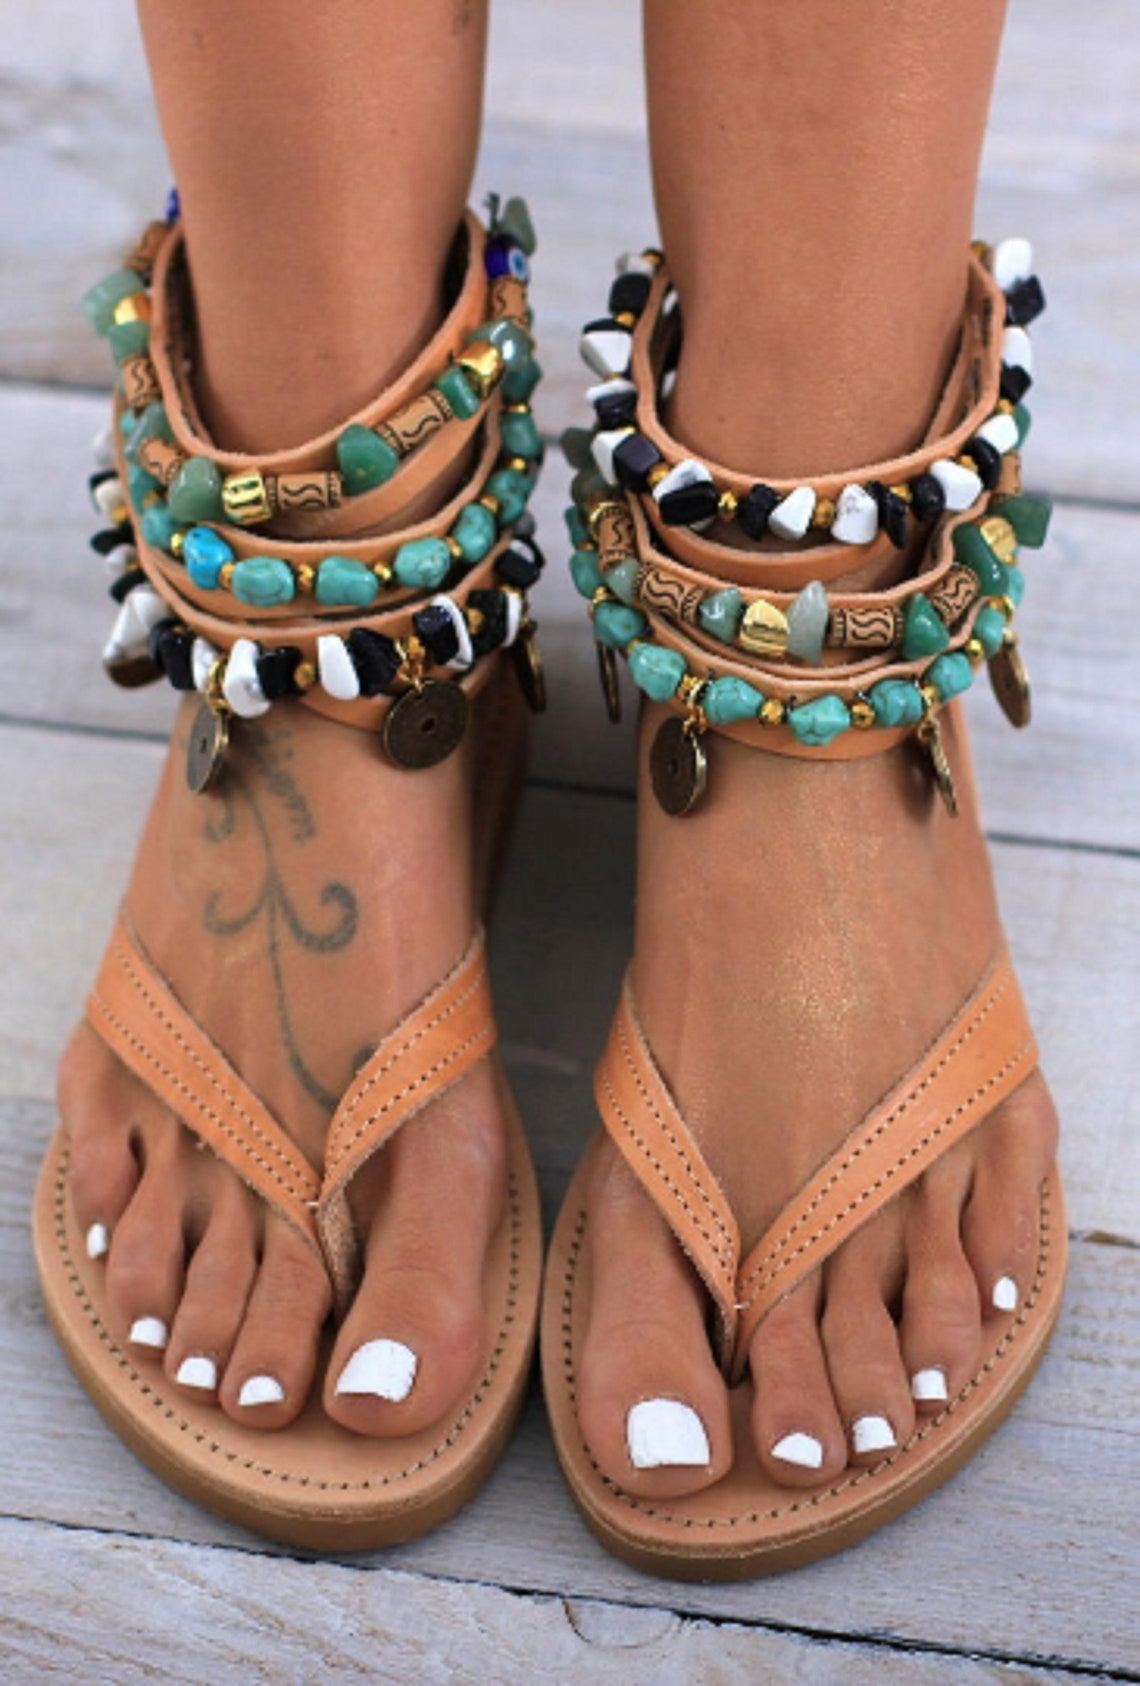 WANDERLUST Sandals Greek Leather Sandals Women Leather | Etsy